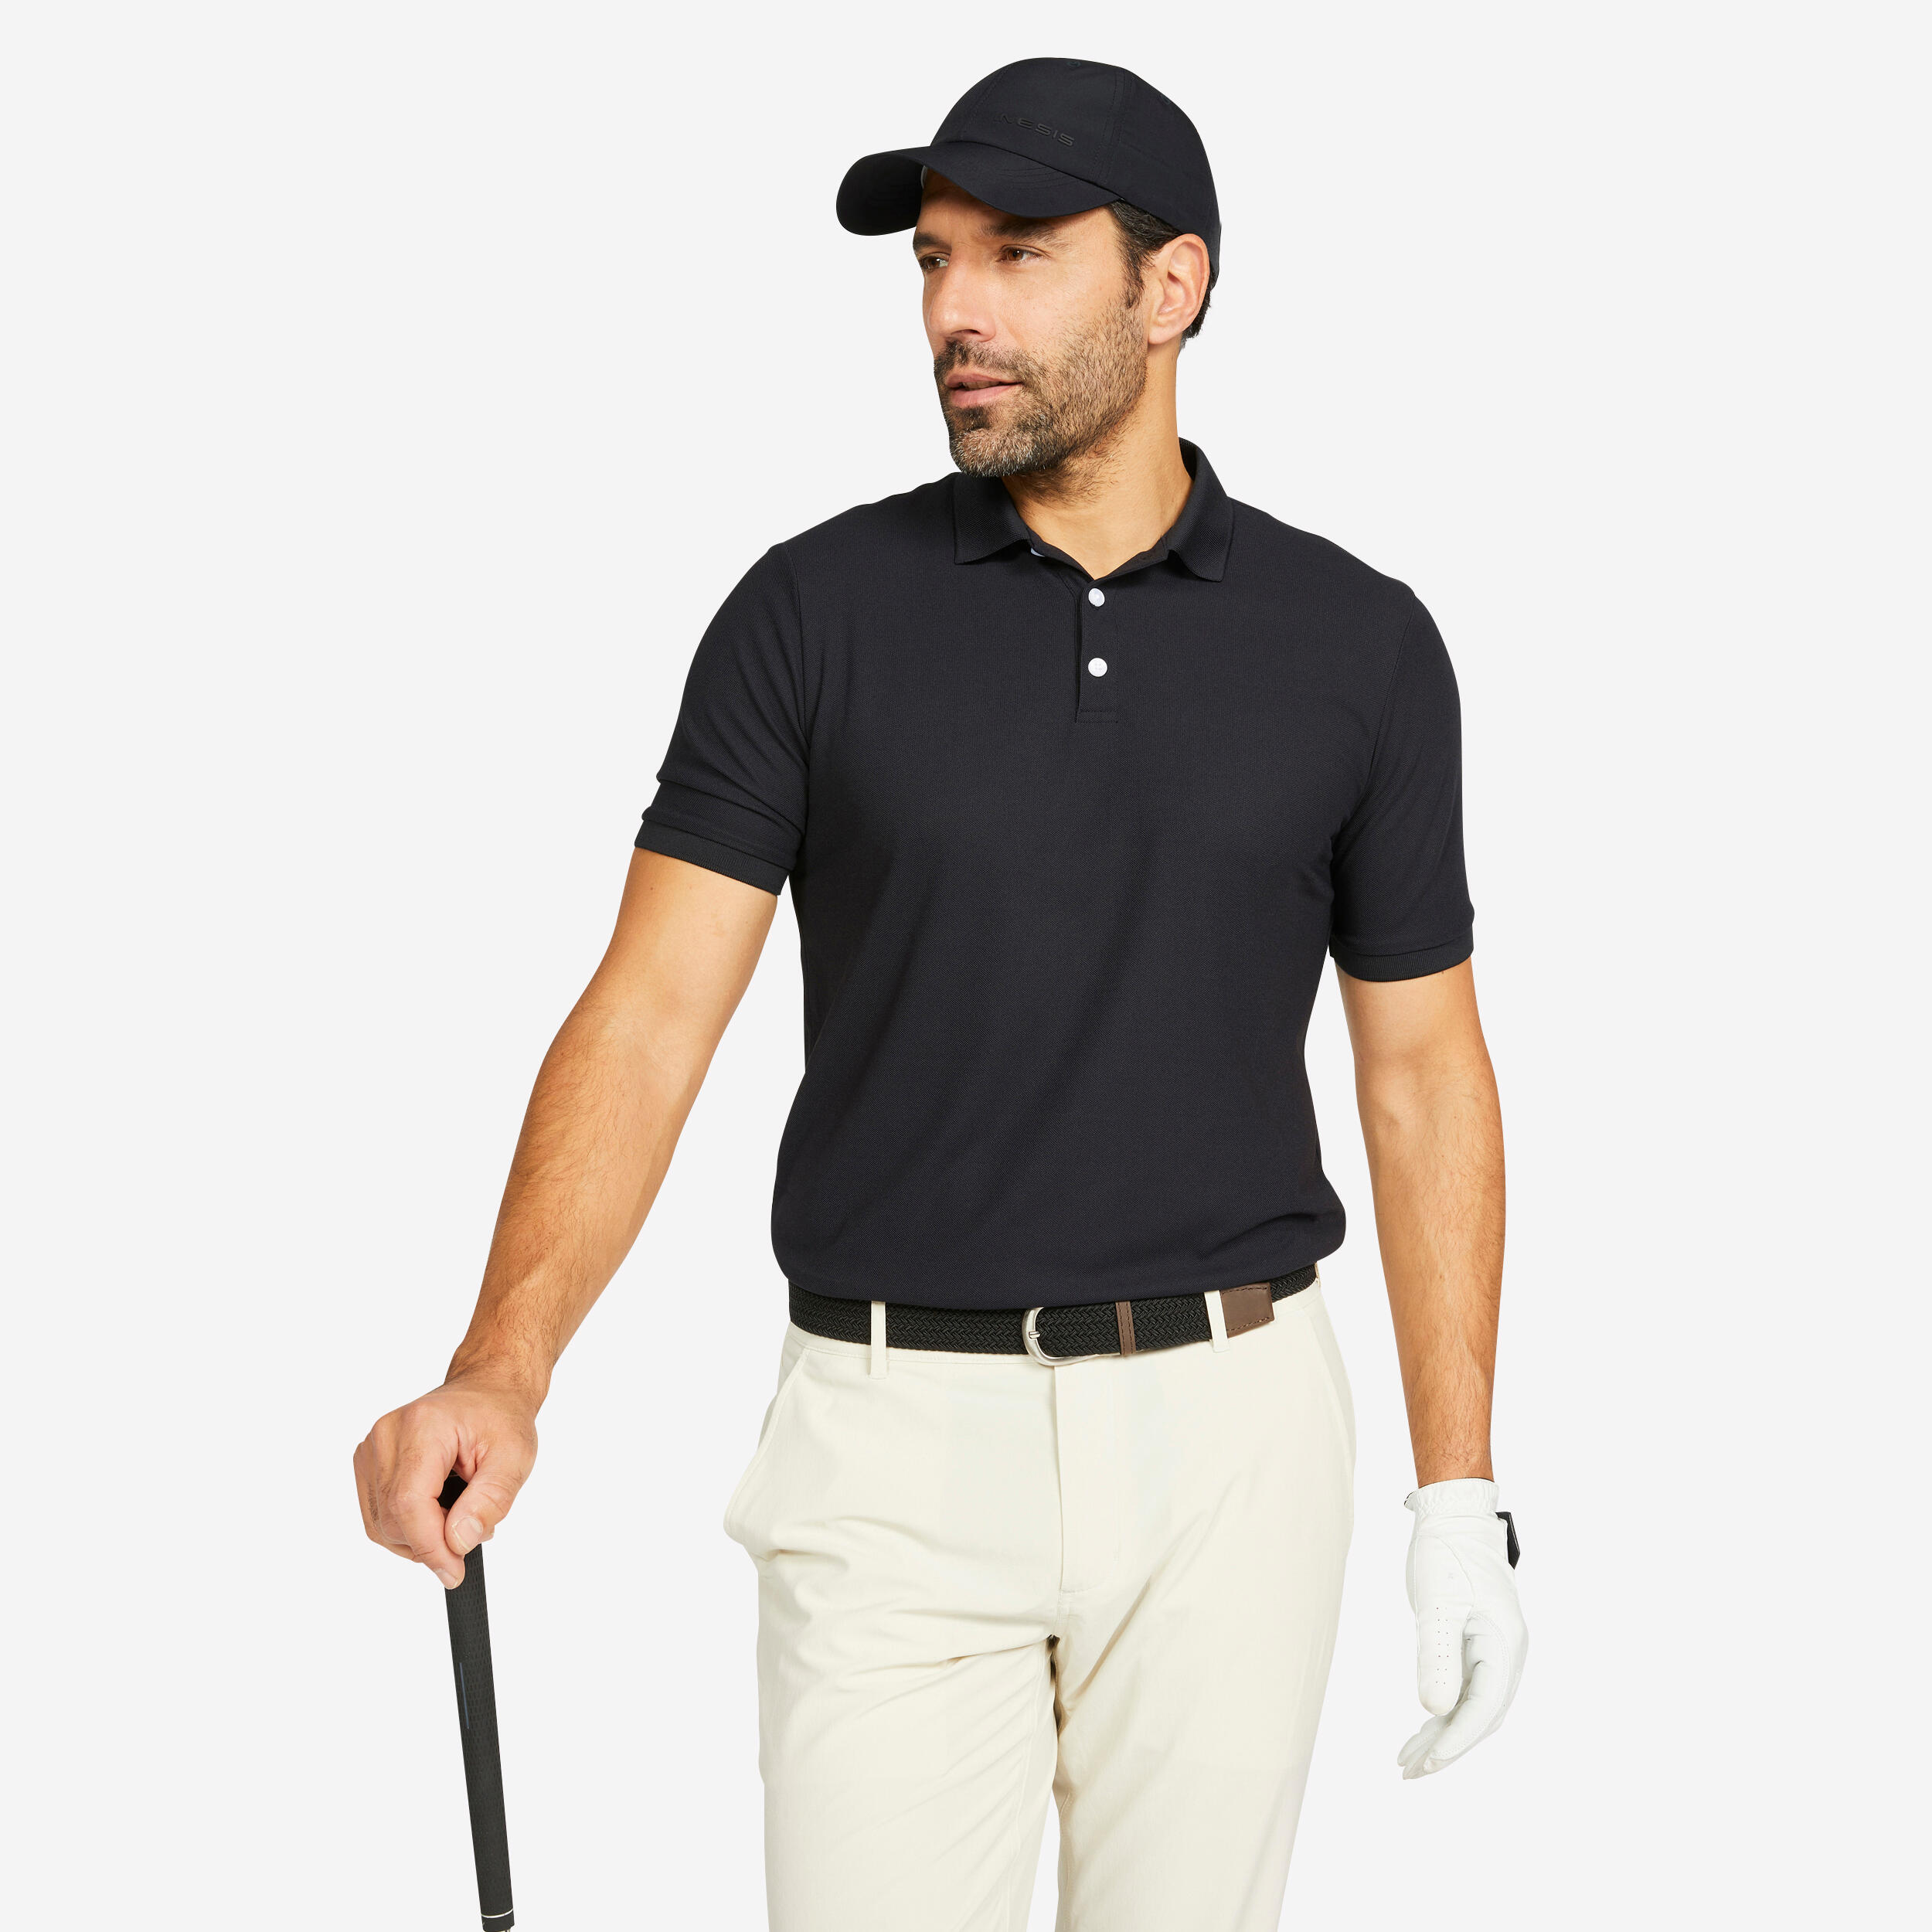 Men’s Golf Polo Shirt - WW 500 Black